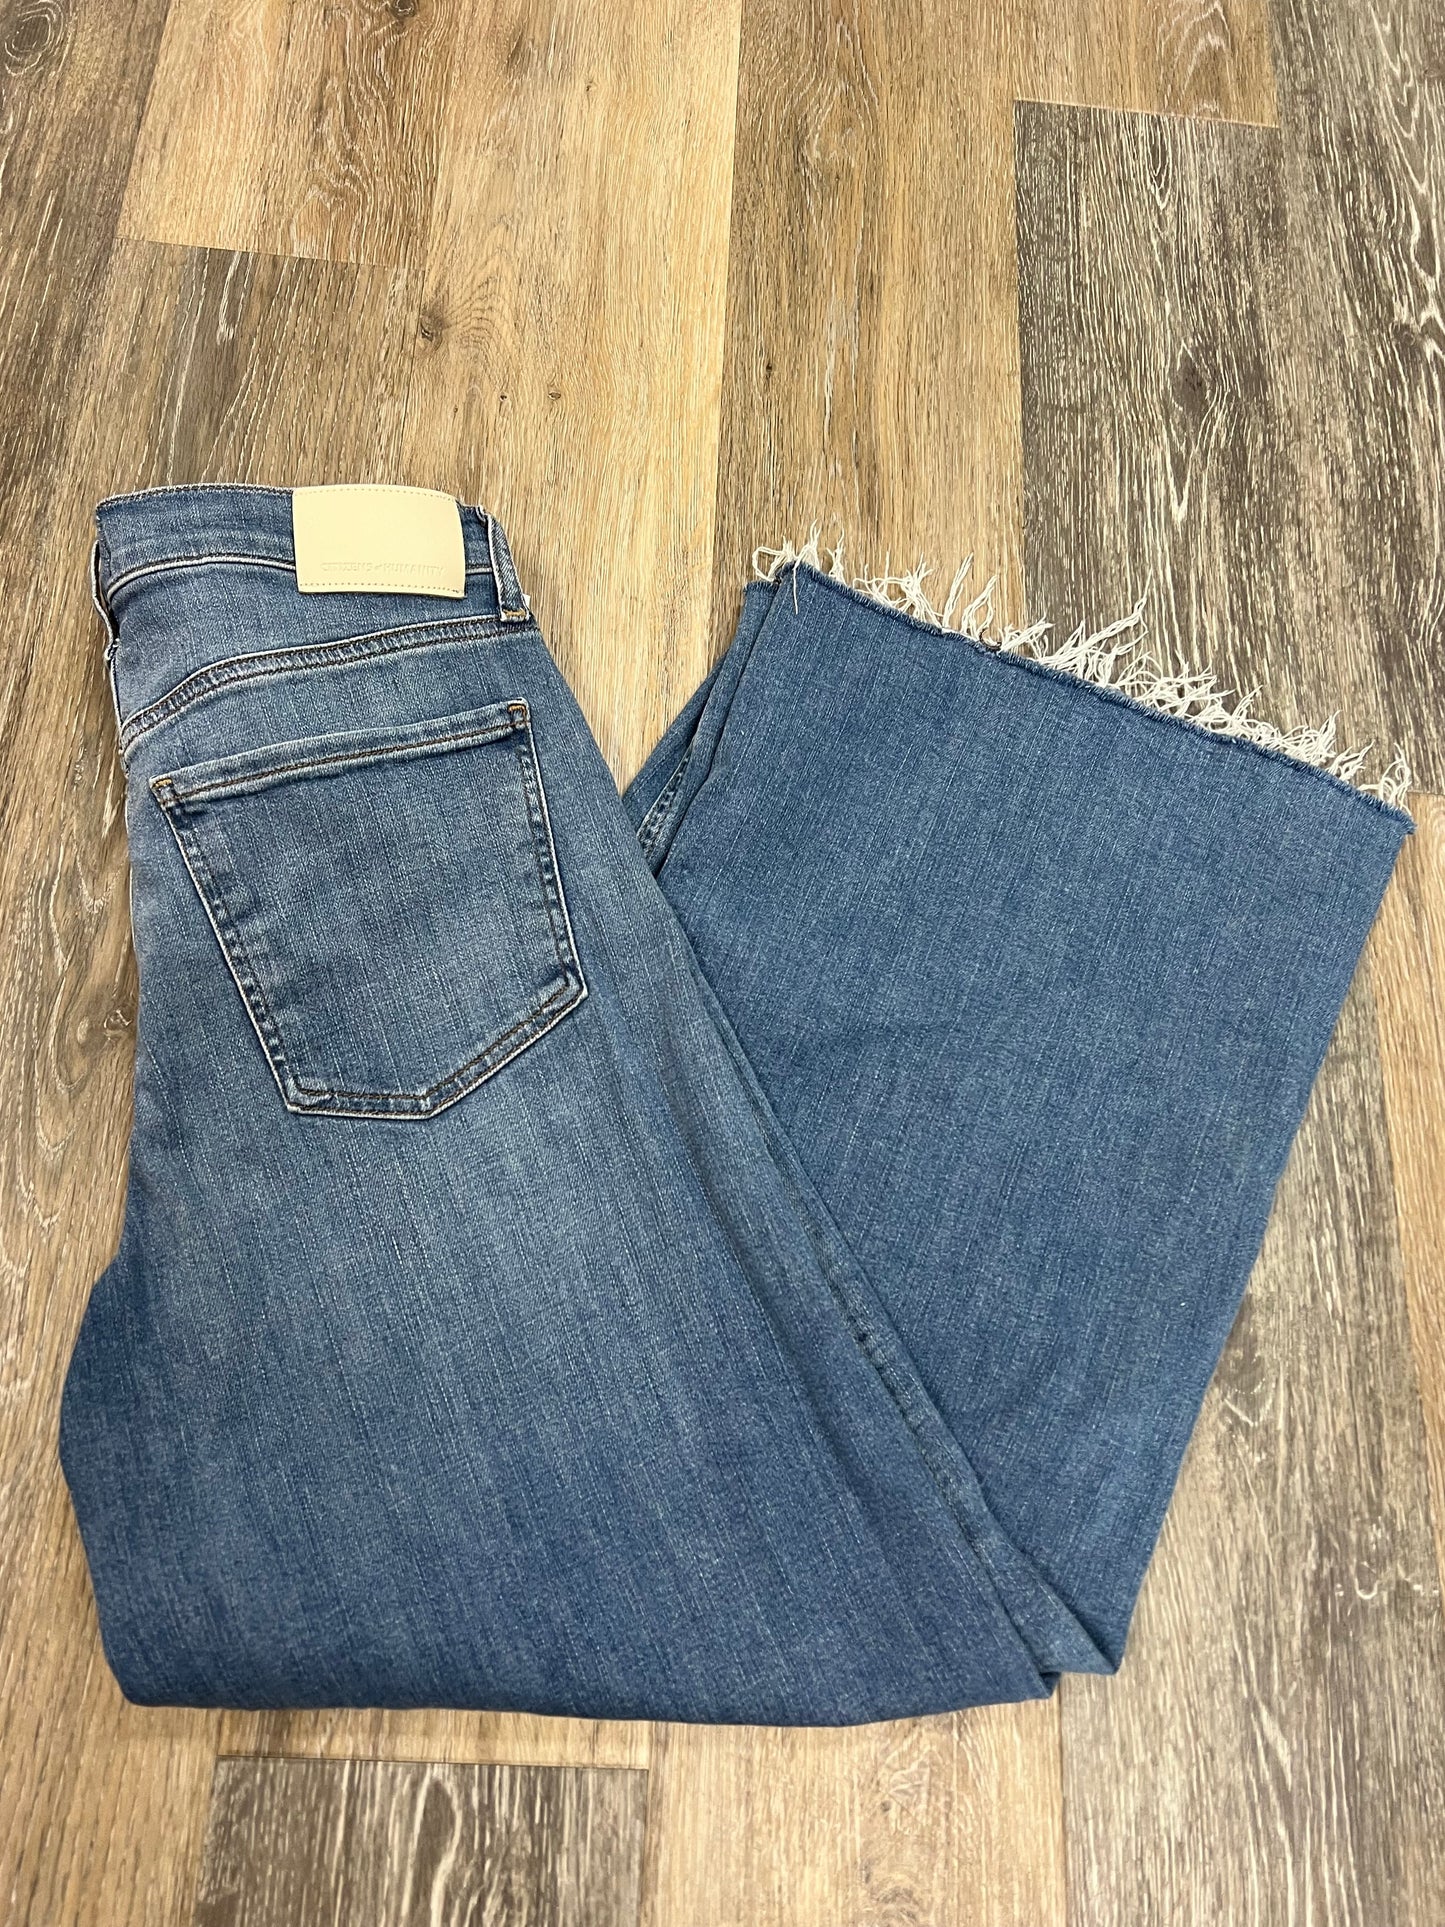 Blue Denim Jeans Designer Citizens Of Humanity, Size 6/28